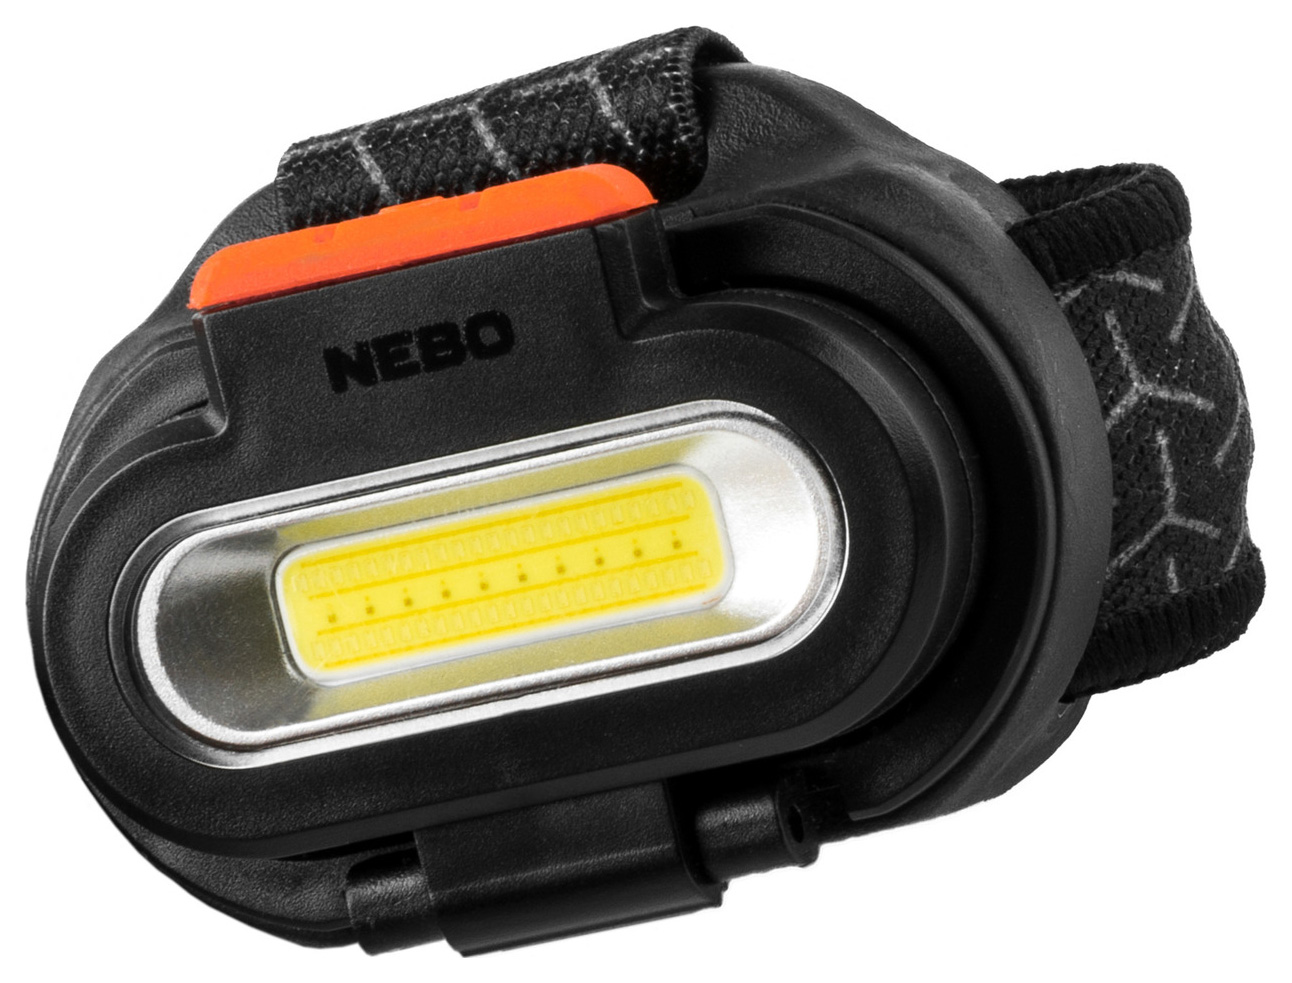 Image of Nebo Einstein™ 1500 FLEX Rechargeable Headlamp